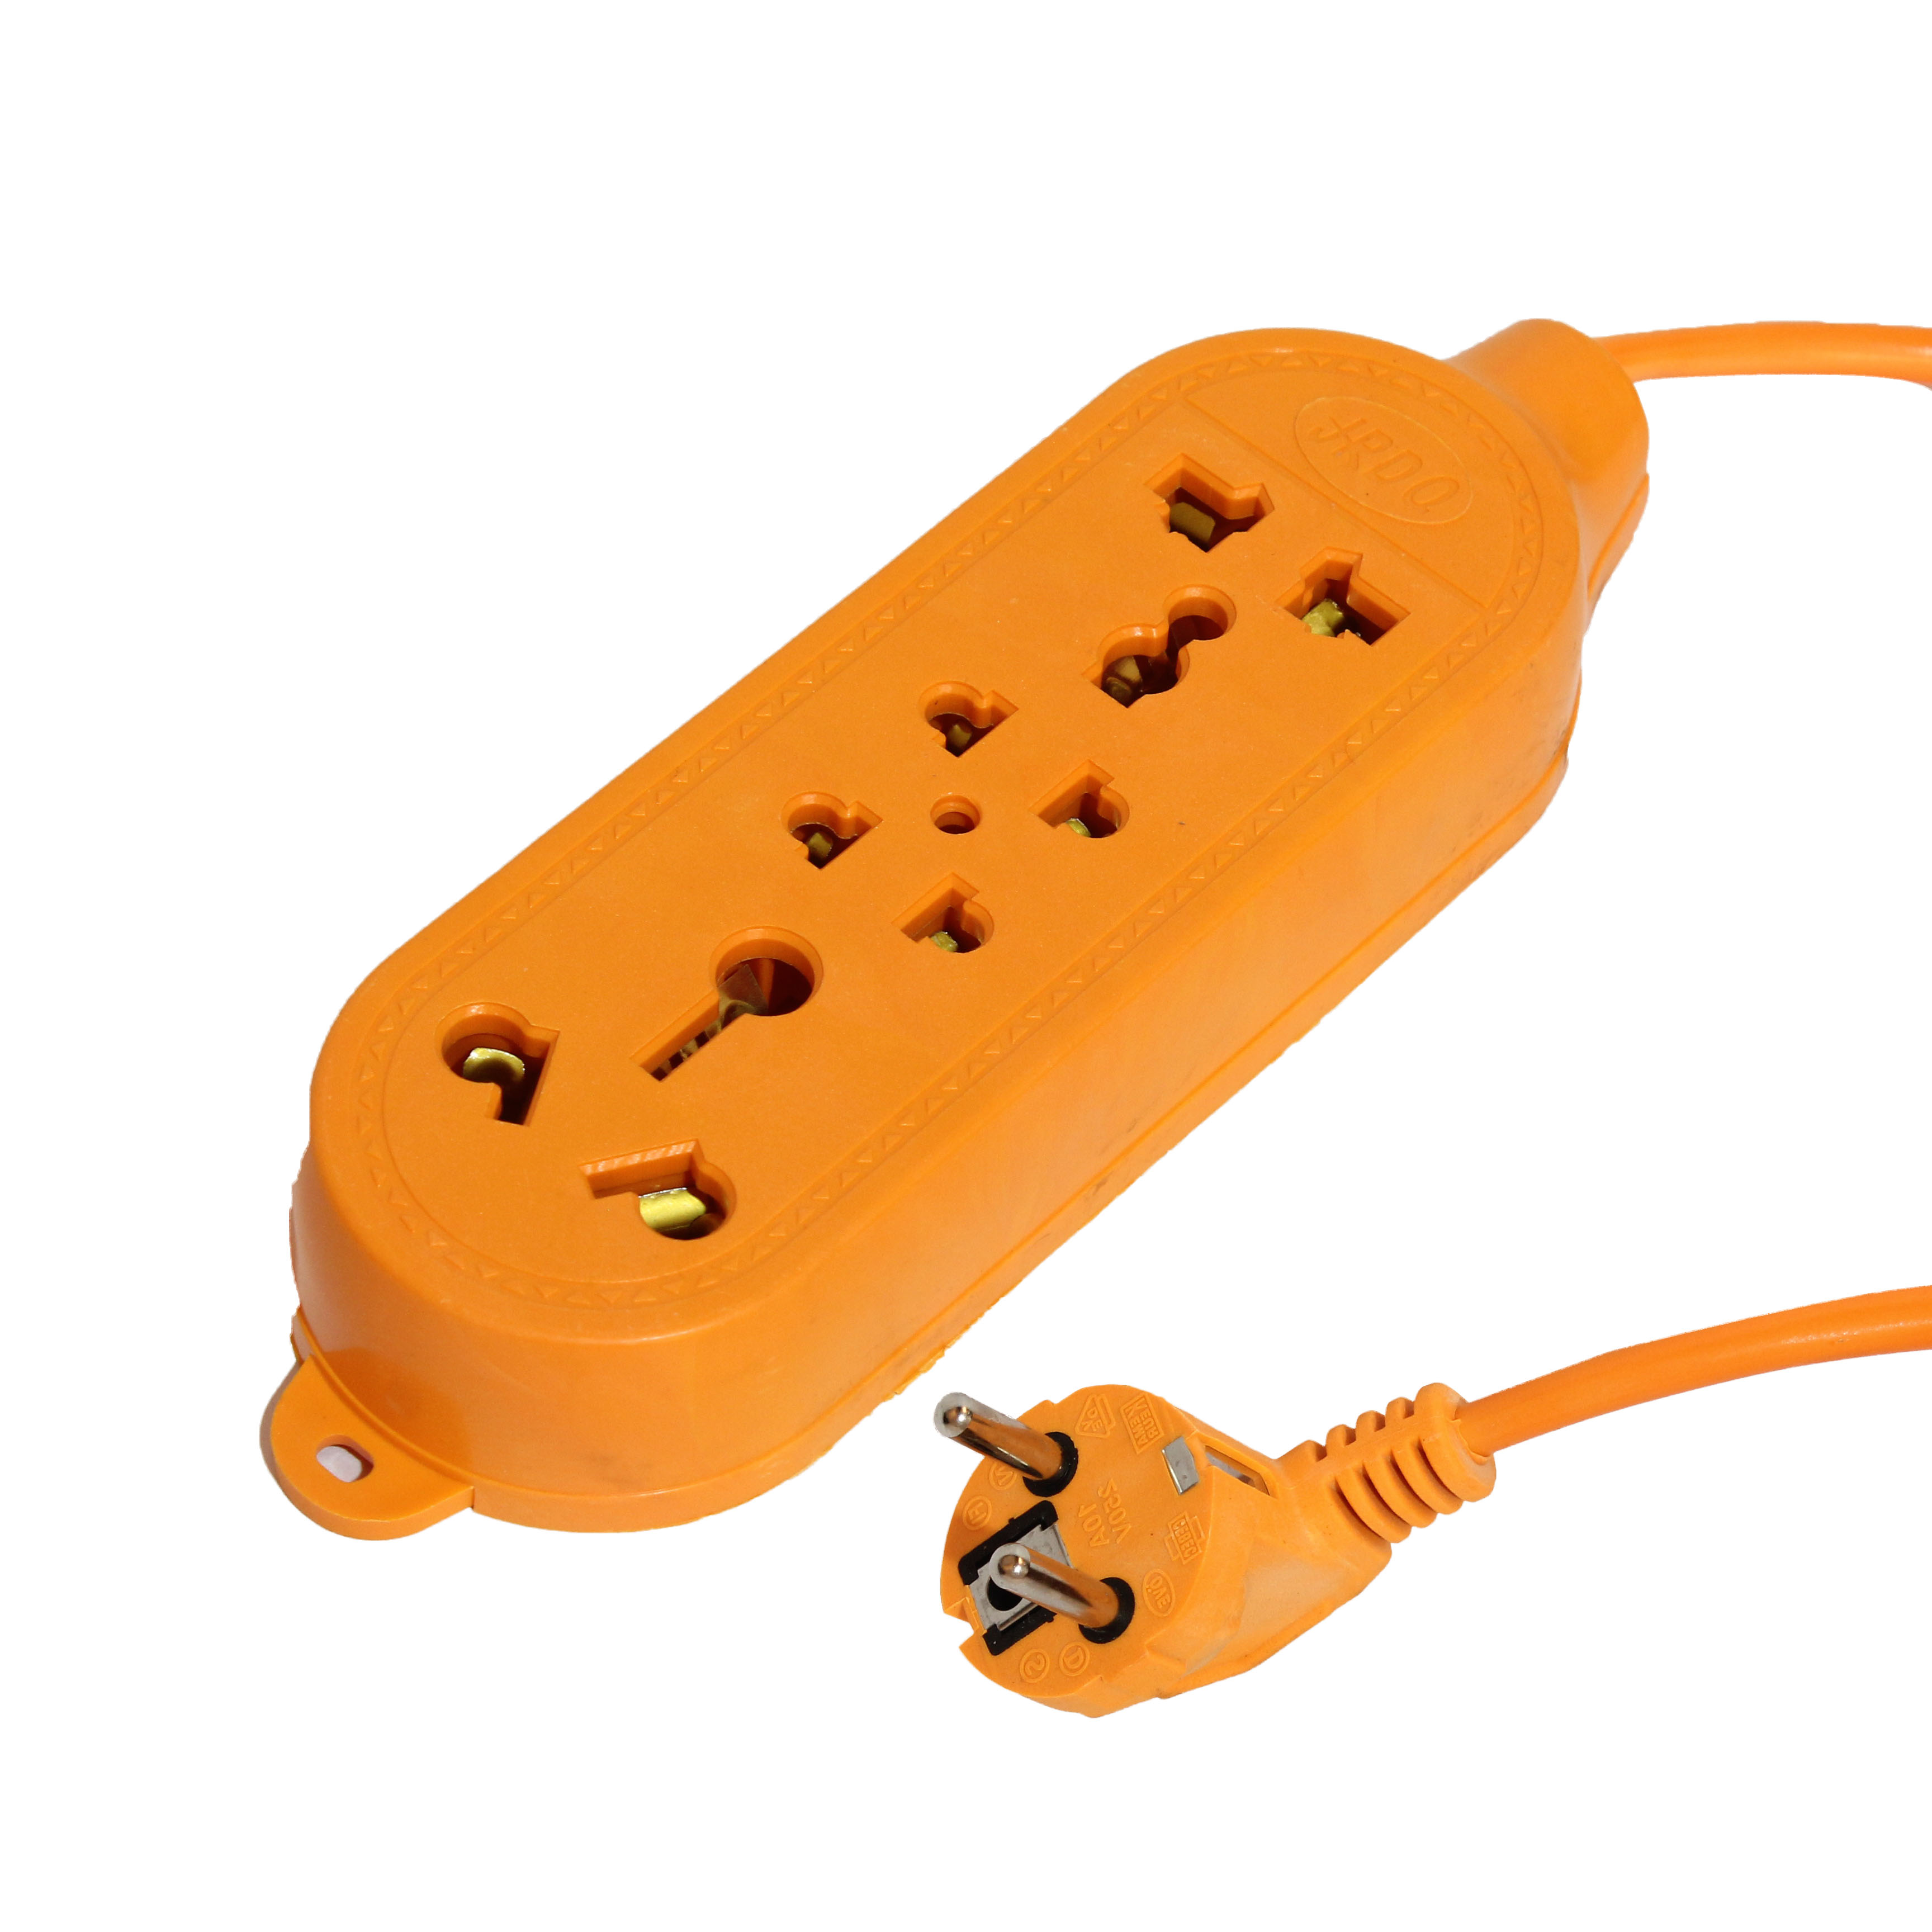 extension-socket-multiplug-power-cord-4-port-yellow-orange-9m-kn-by-jde